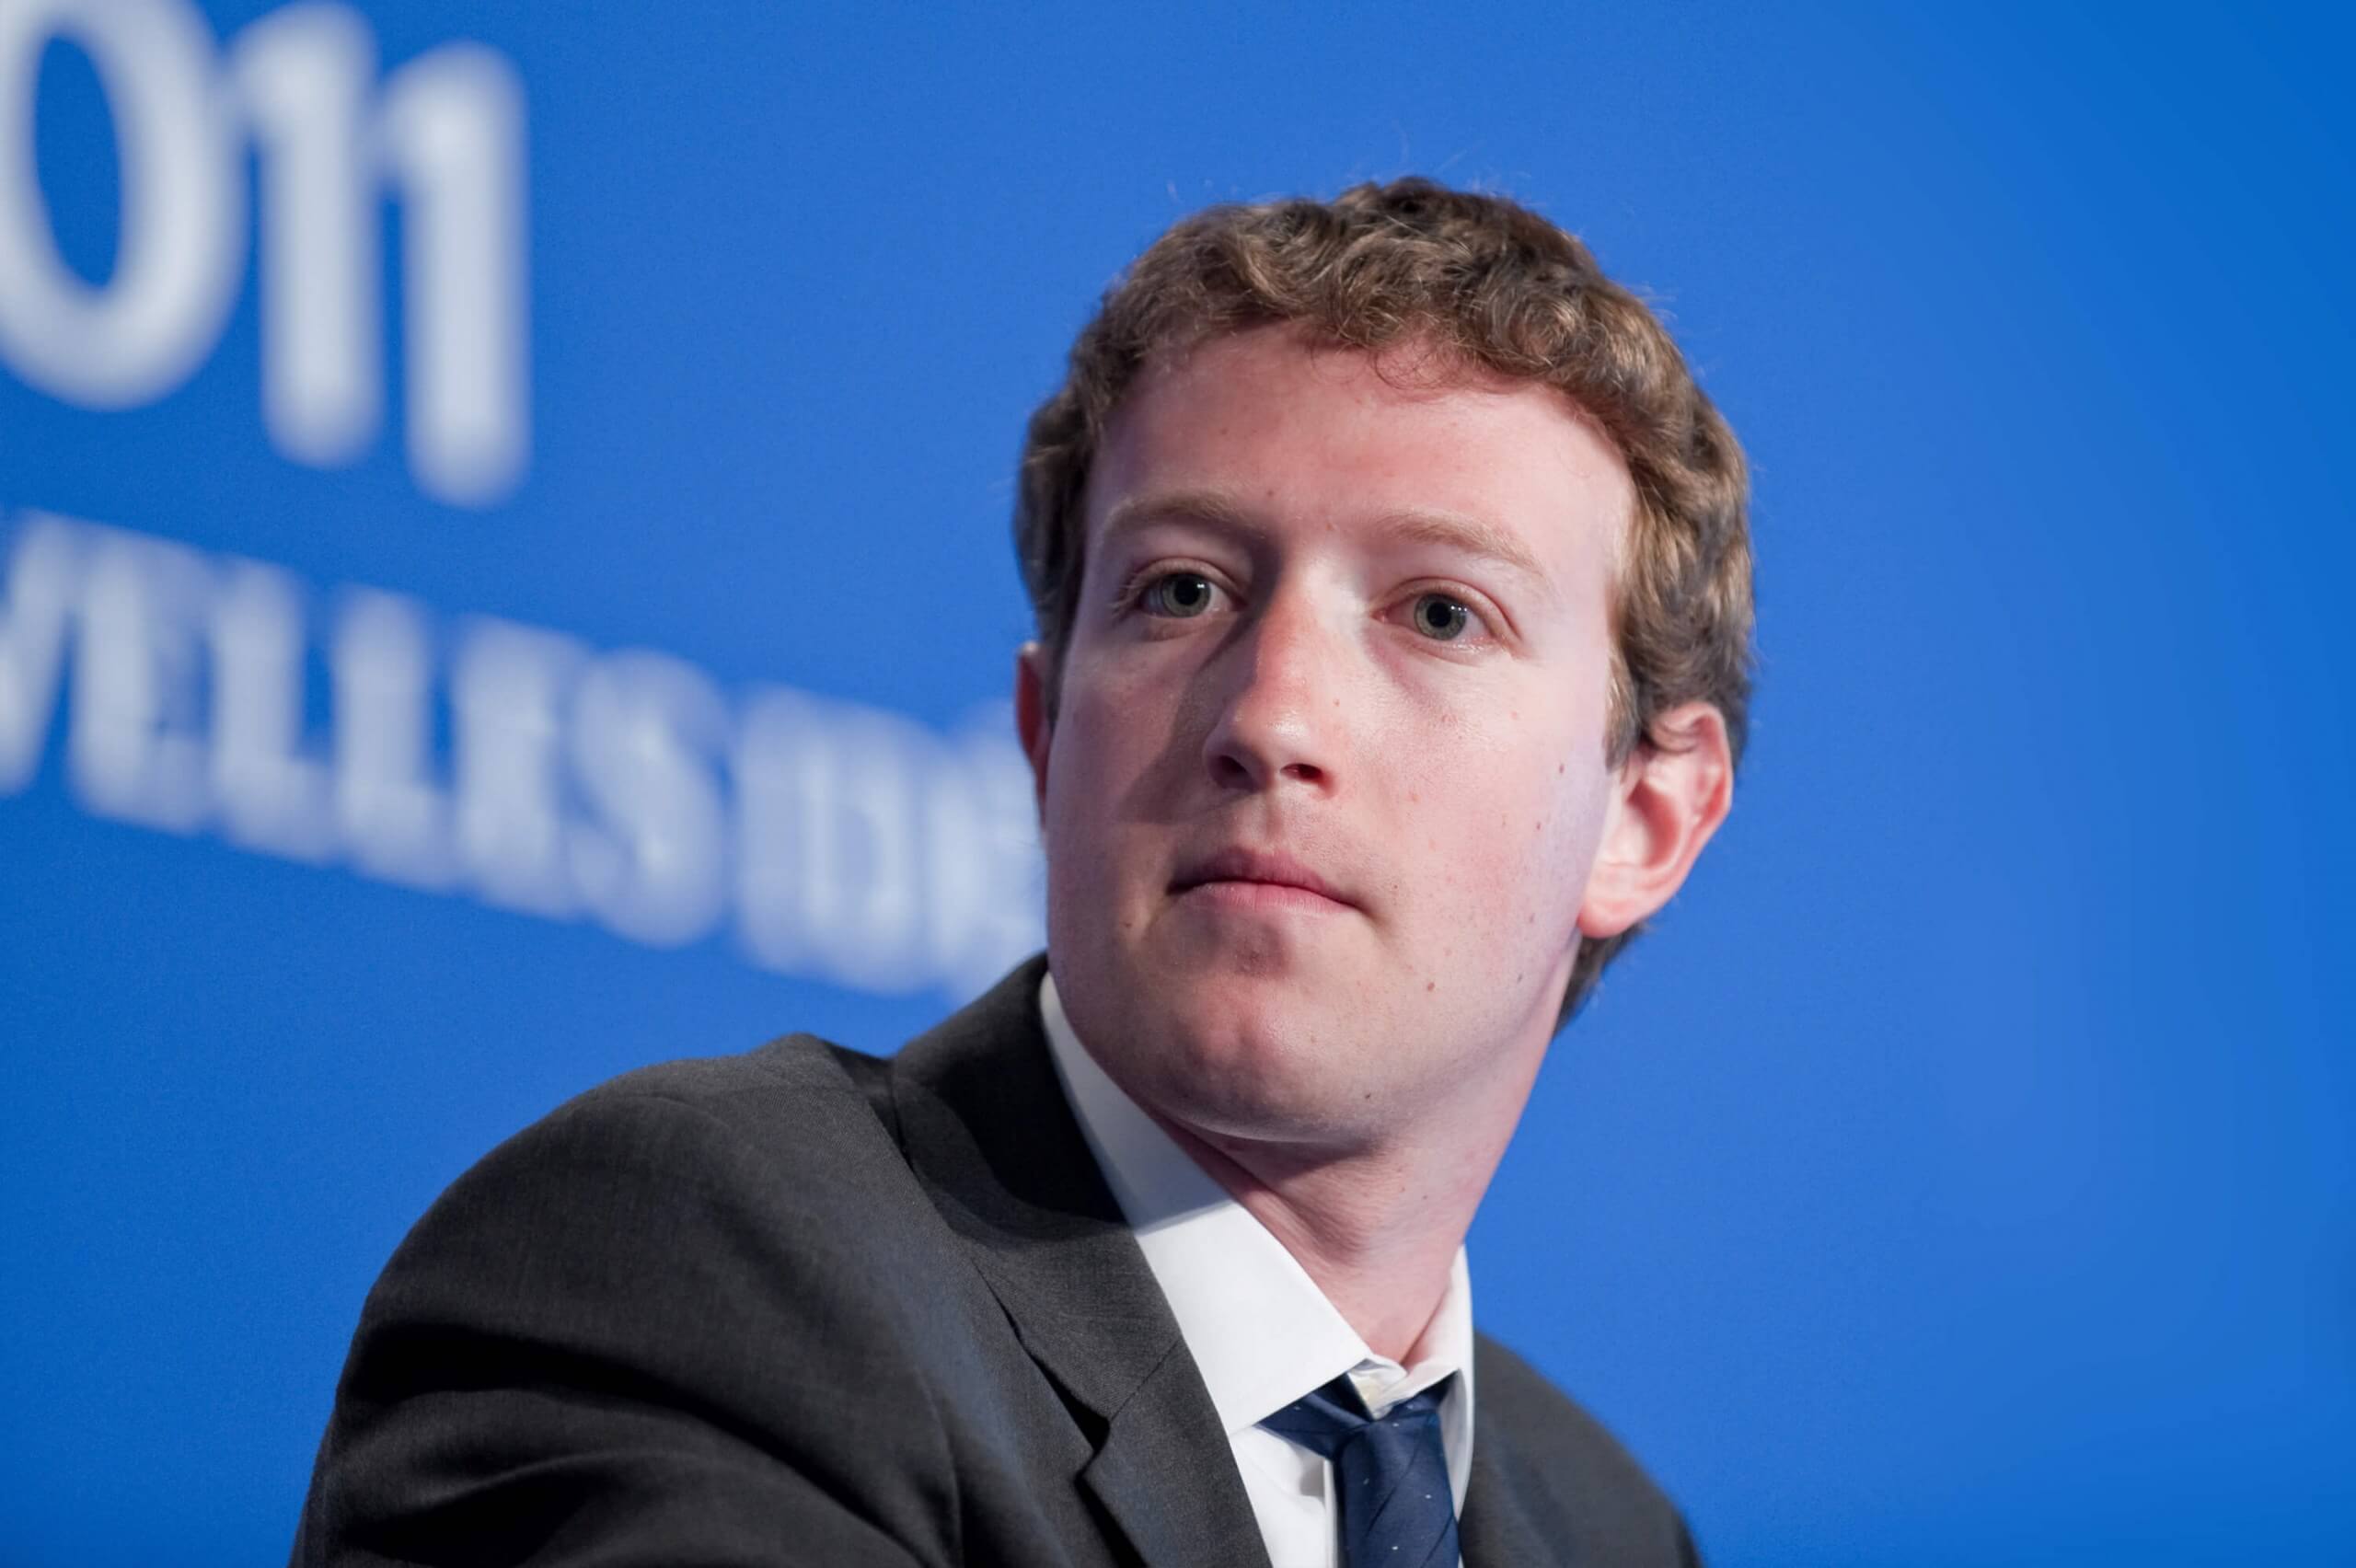 Mark Zuckerberg is $7 billion poorer as more companies join Facebook ad boycott